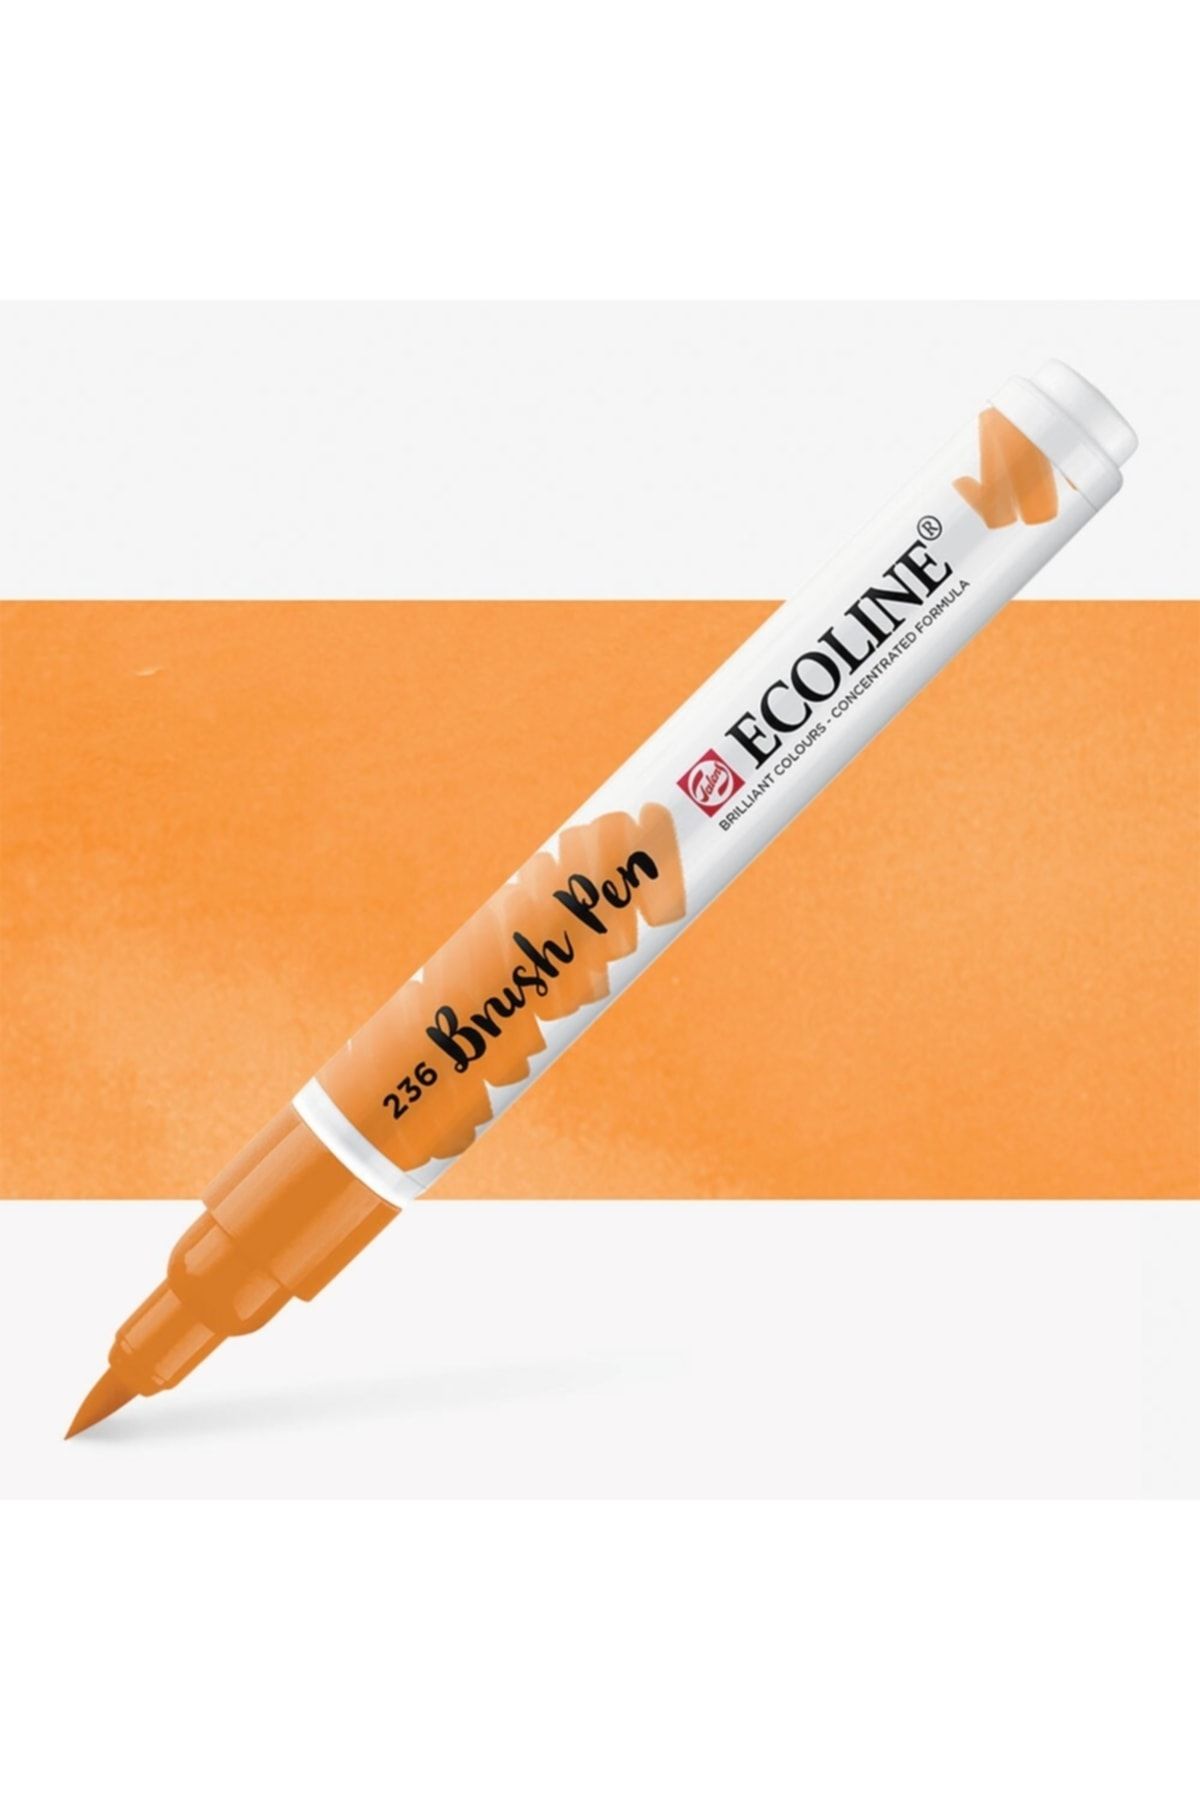 Talens Ecoline Suluboya Brush Pen Light Orange 236